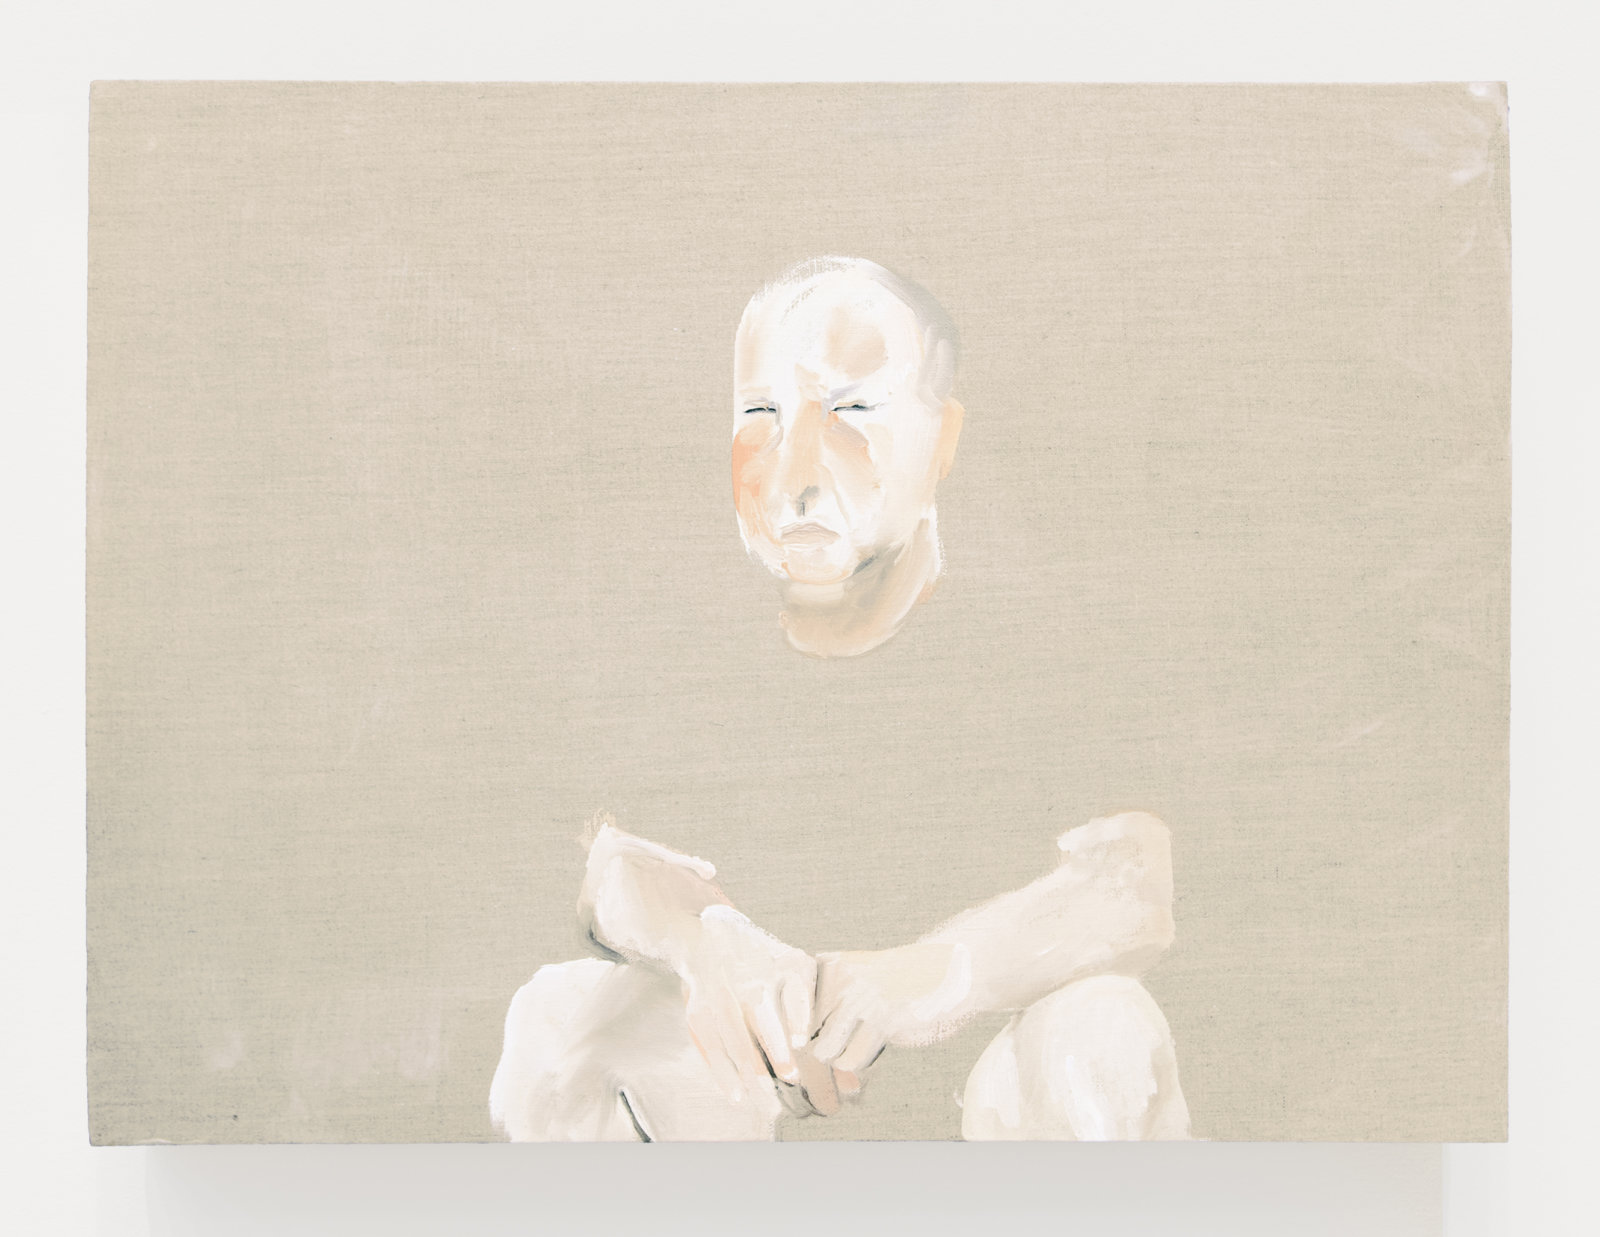 Brenda Draney, The Righteous, 2010, oil on linen, 20 x 25 in. (51 x 64 cm)